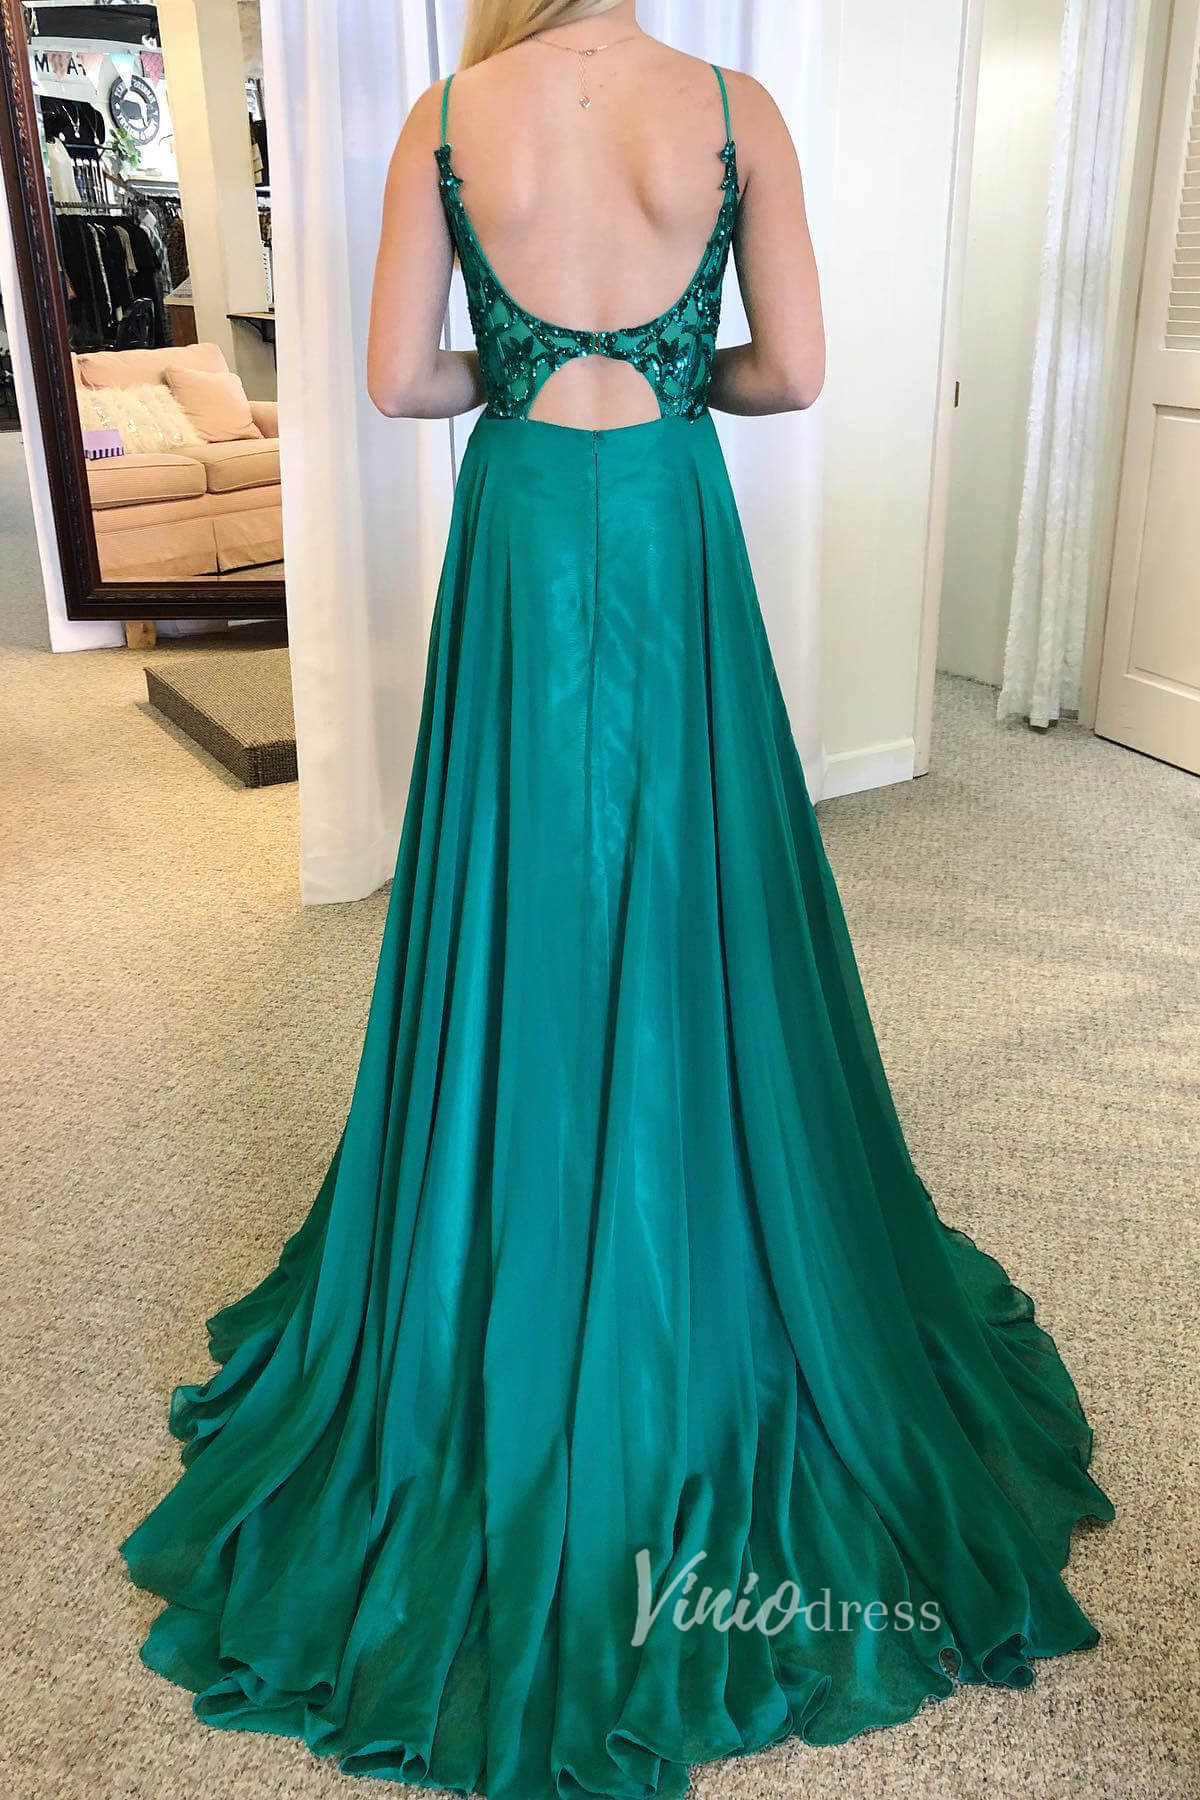 Green Spaghetti Strap Prom Dress with Sequin Bodice and Chiffon Skirt FD3477-prom dresses-Viniodress-Viniodress